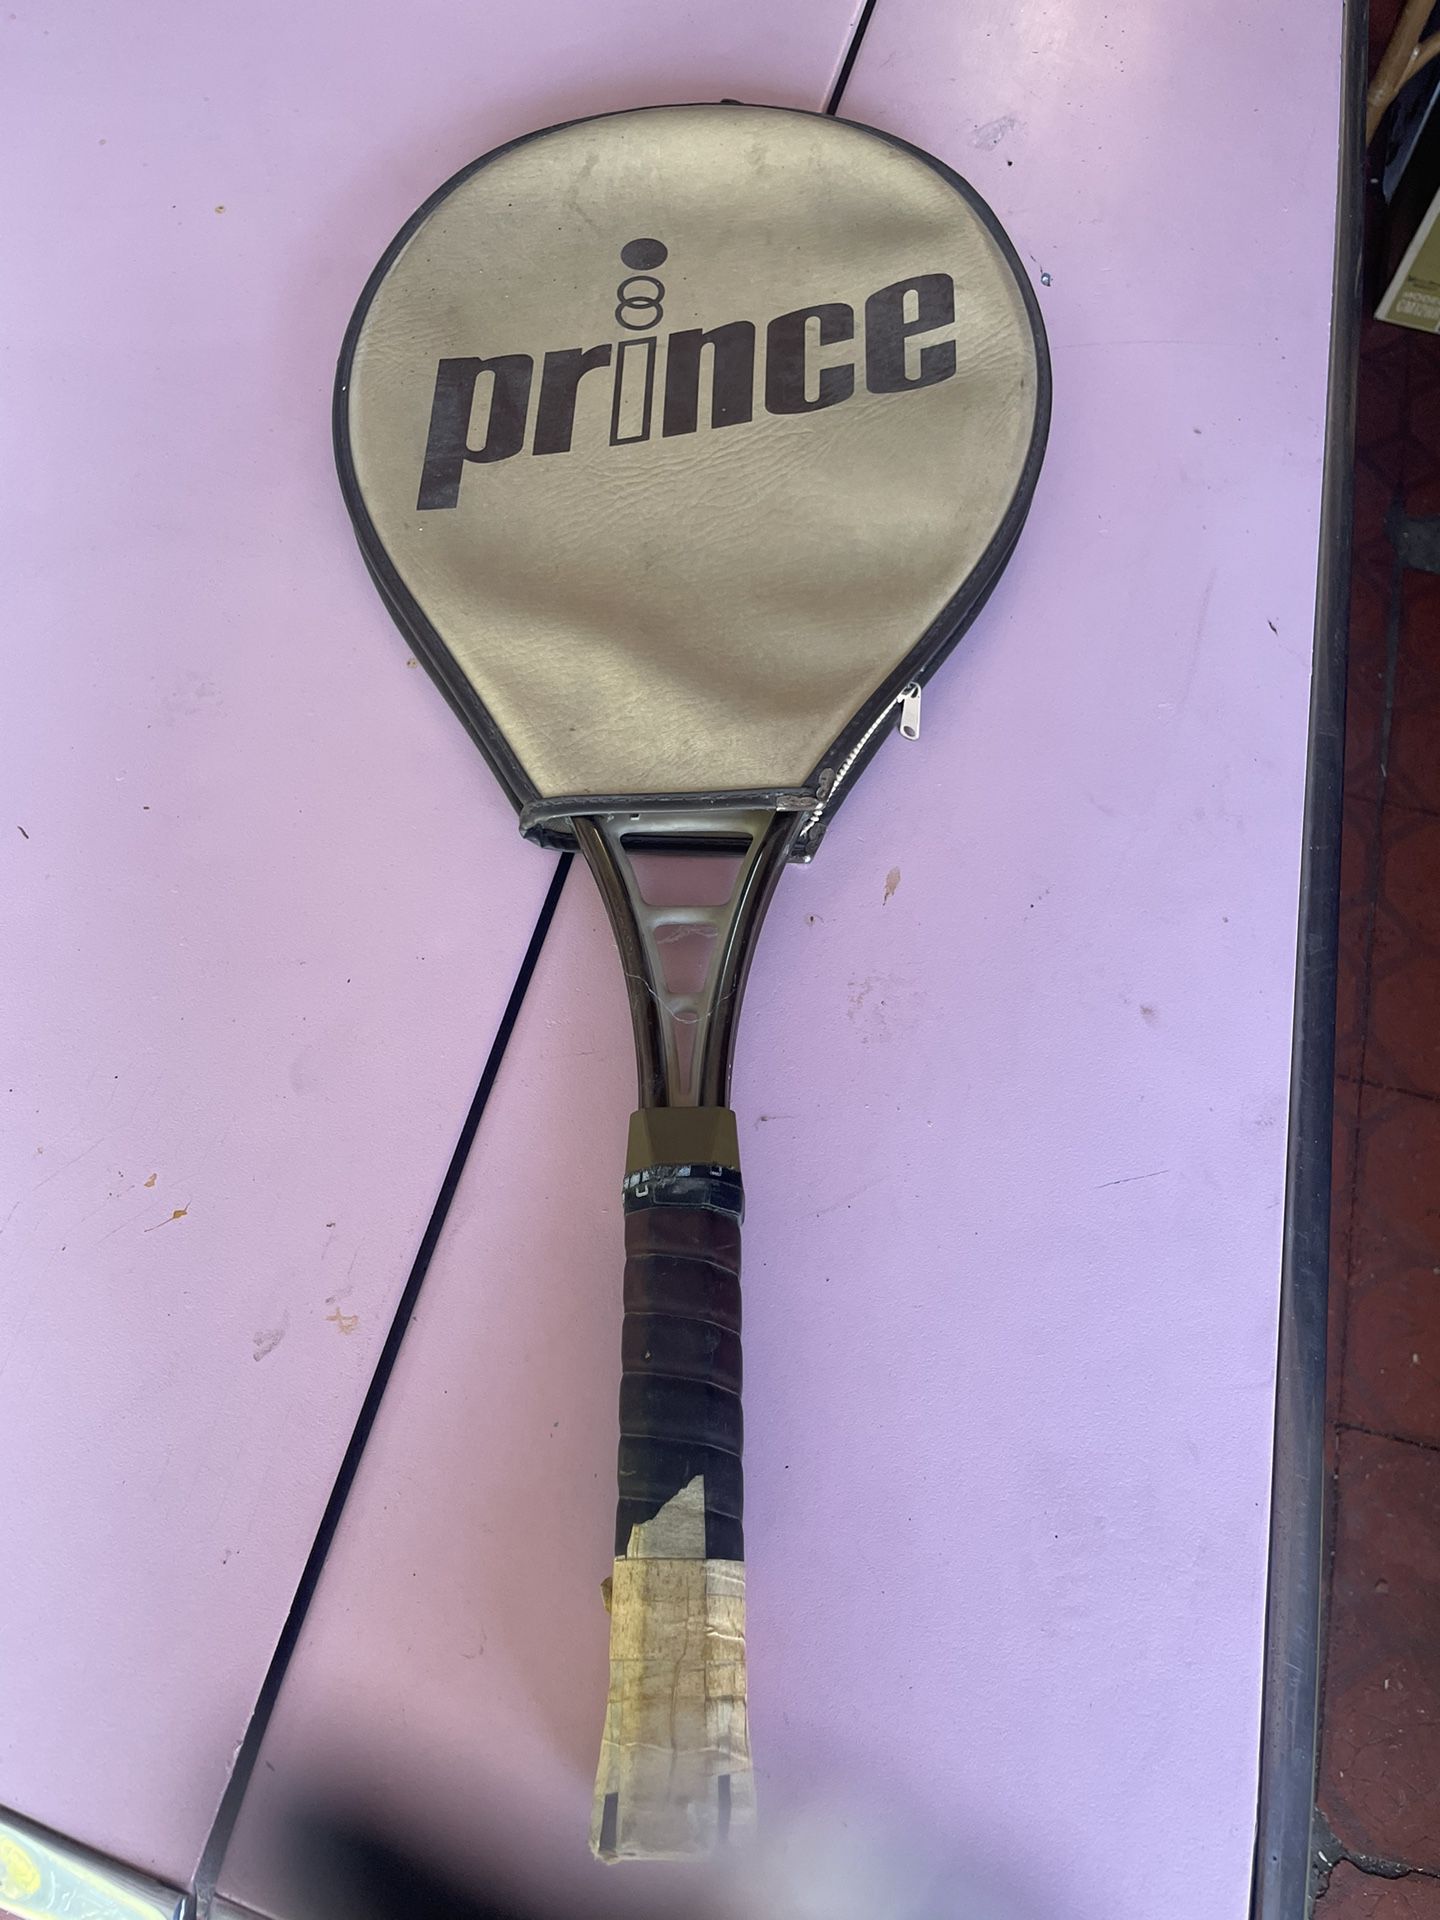 Dunlop, Spirit, Prince Vintage Tennis Rackets 